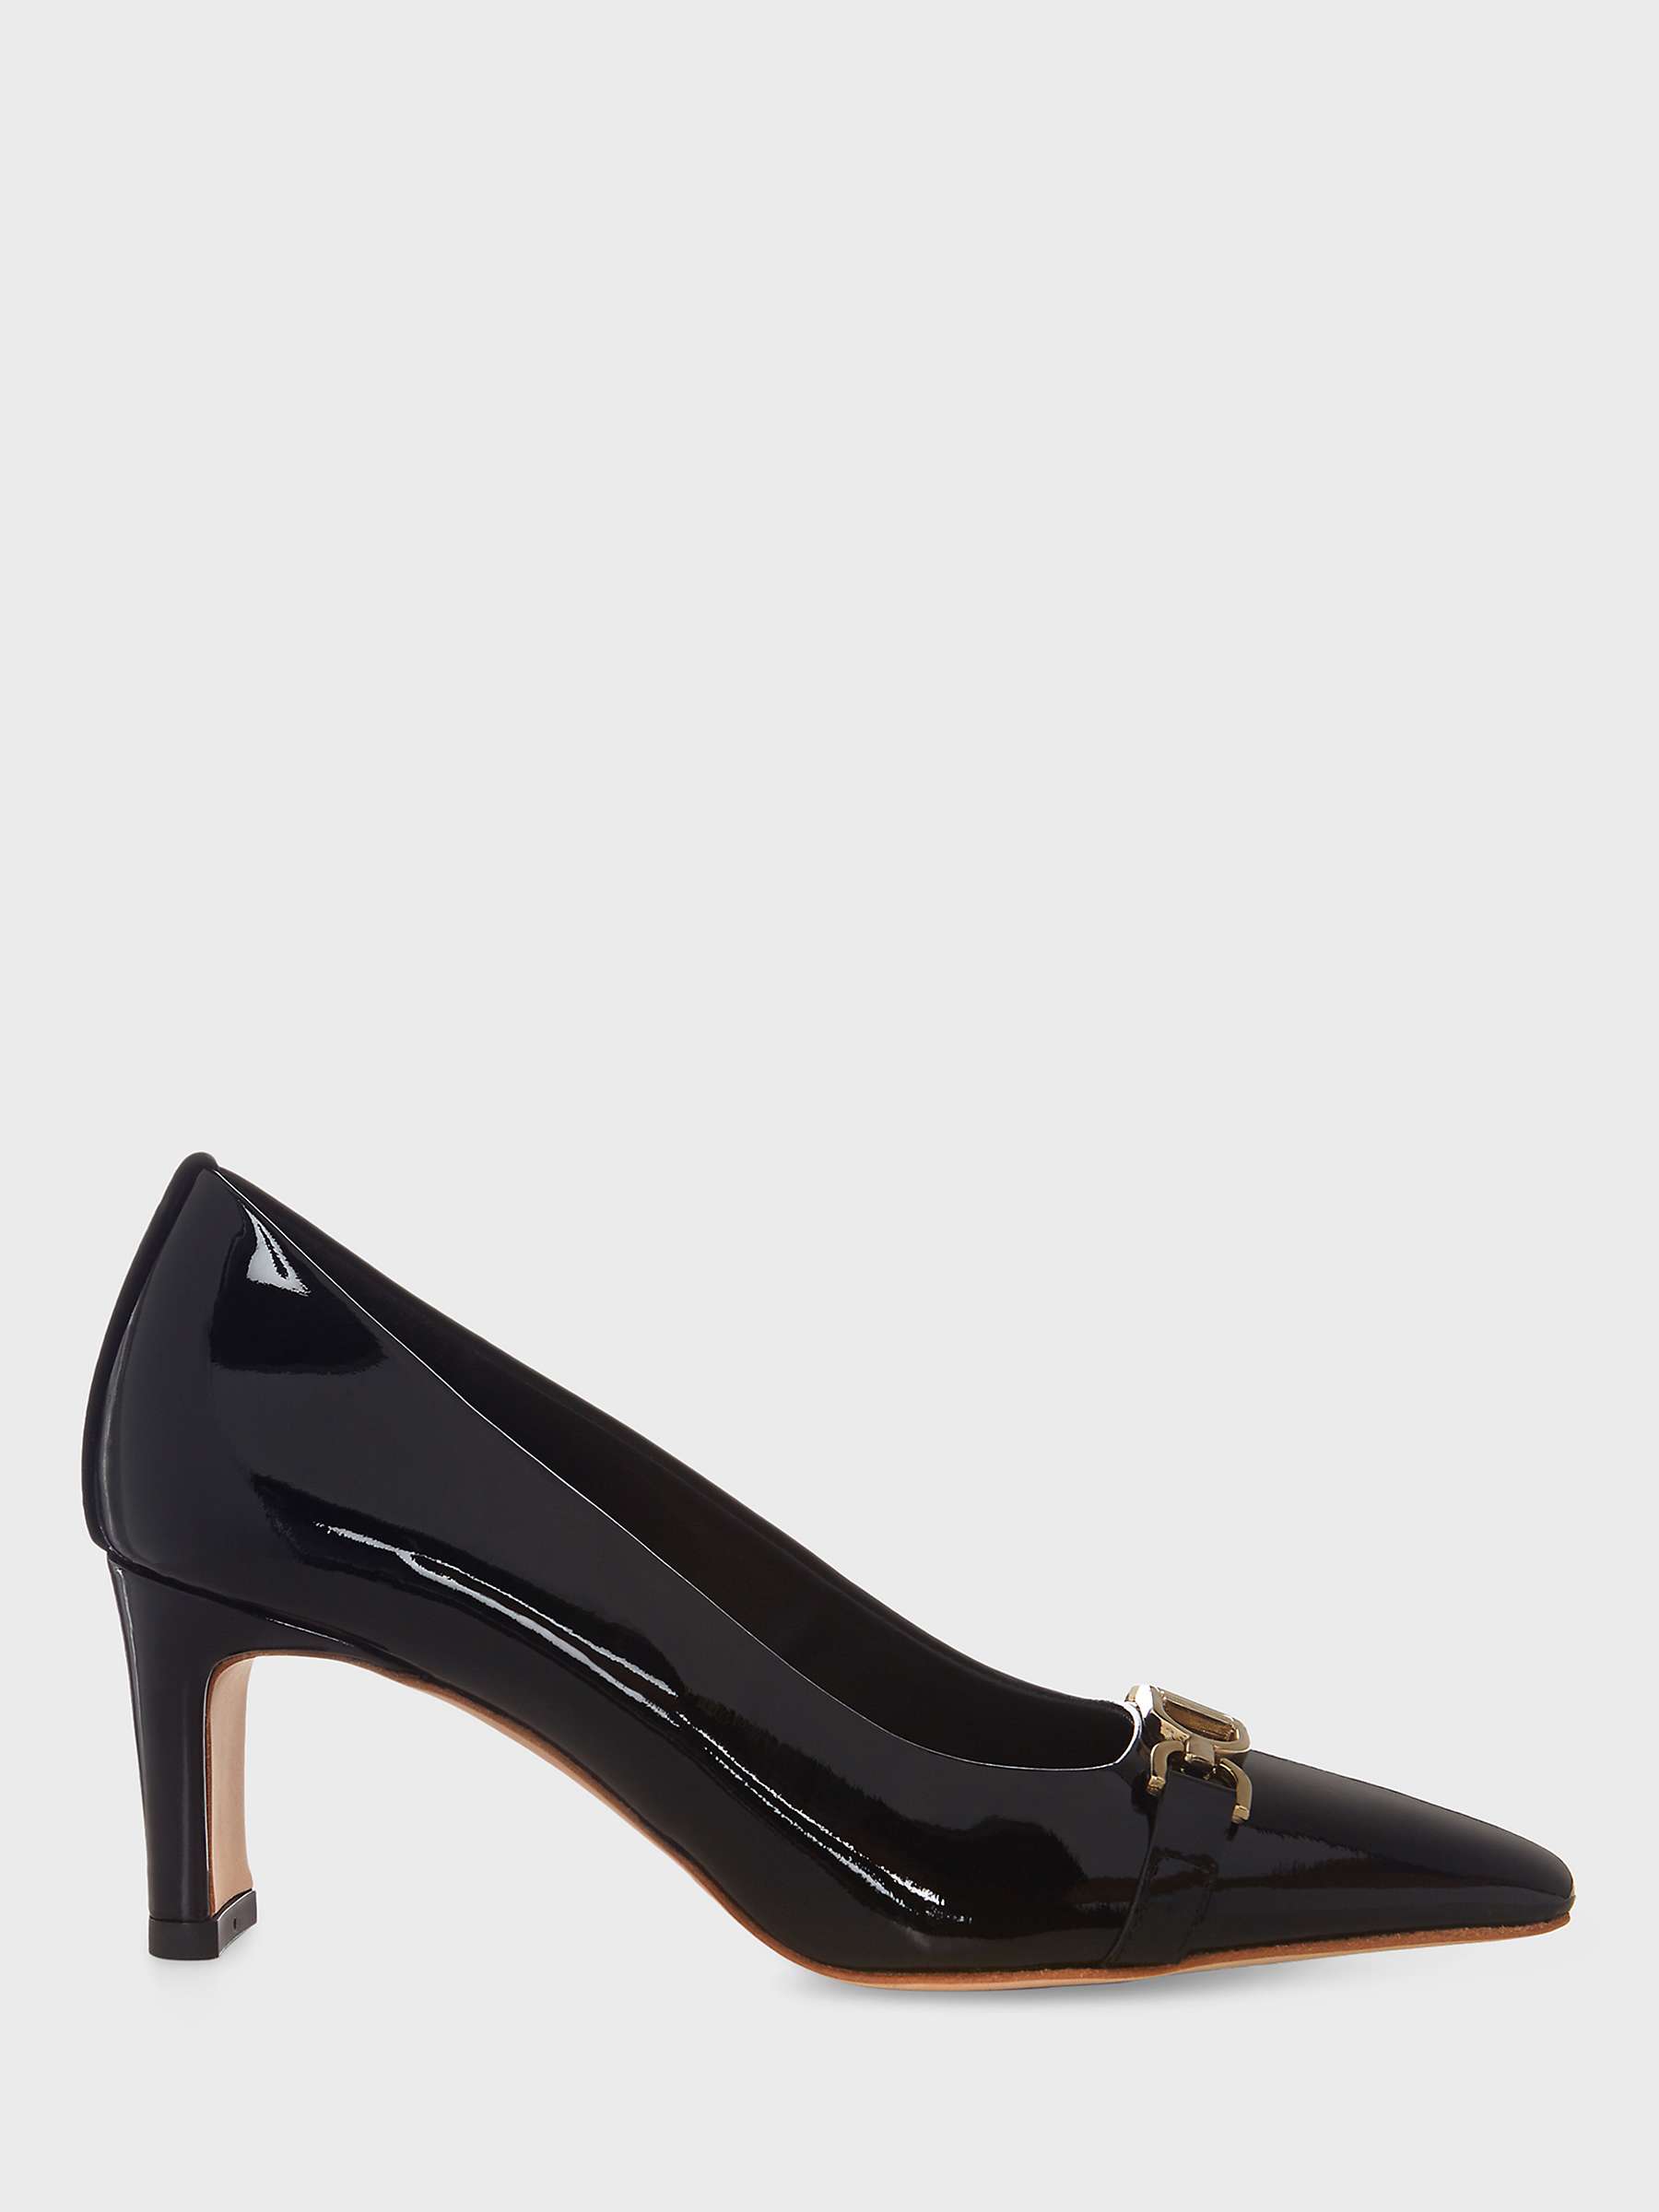 Hobbs Ophelia Court Shoes, Black at John Lewis & Partners